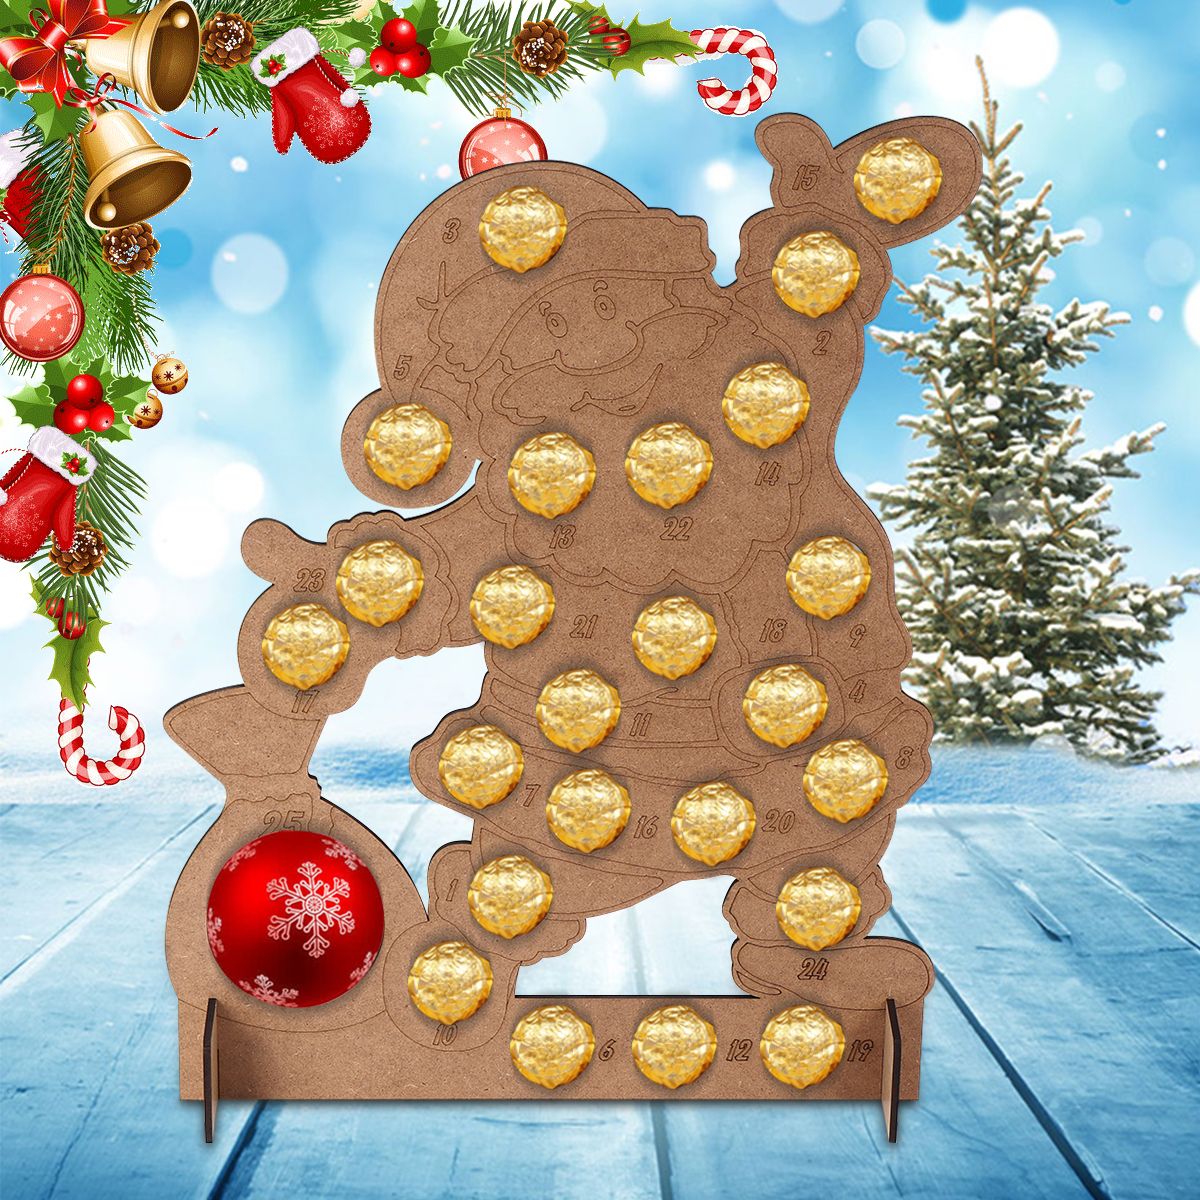 25-Holes-Wooden-Christmas-Advent-Calendar-Chocolates-Box-Xmas-Gift-Case-Decorations-1460330